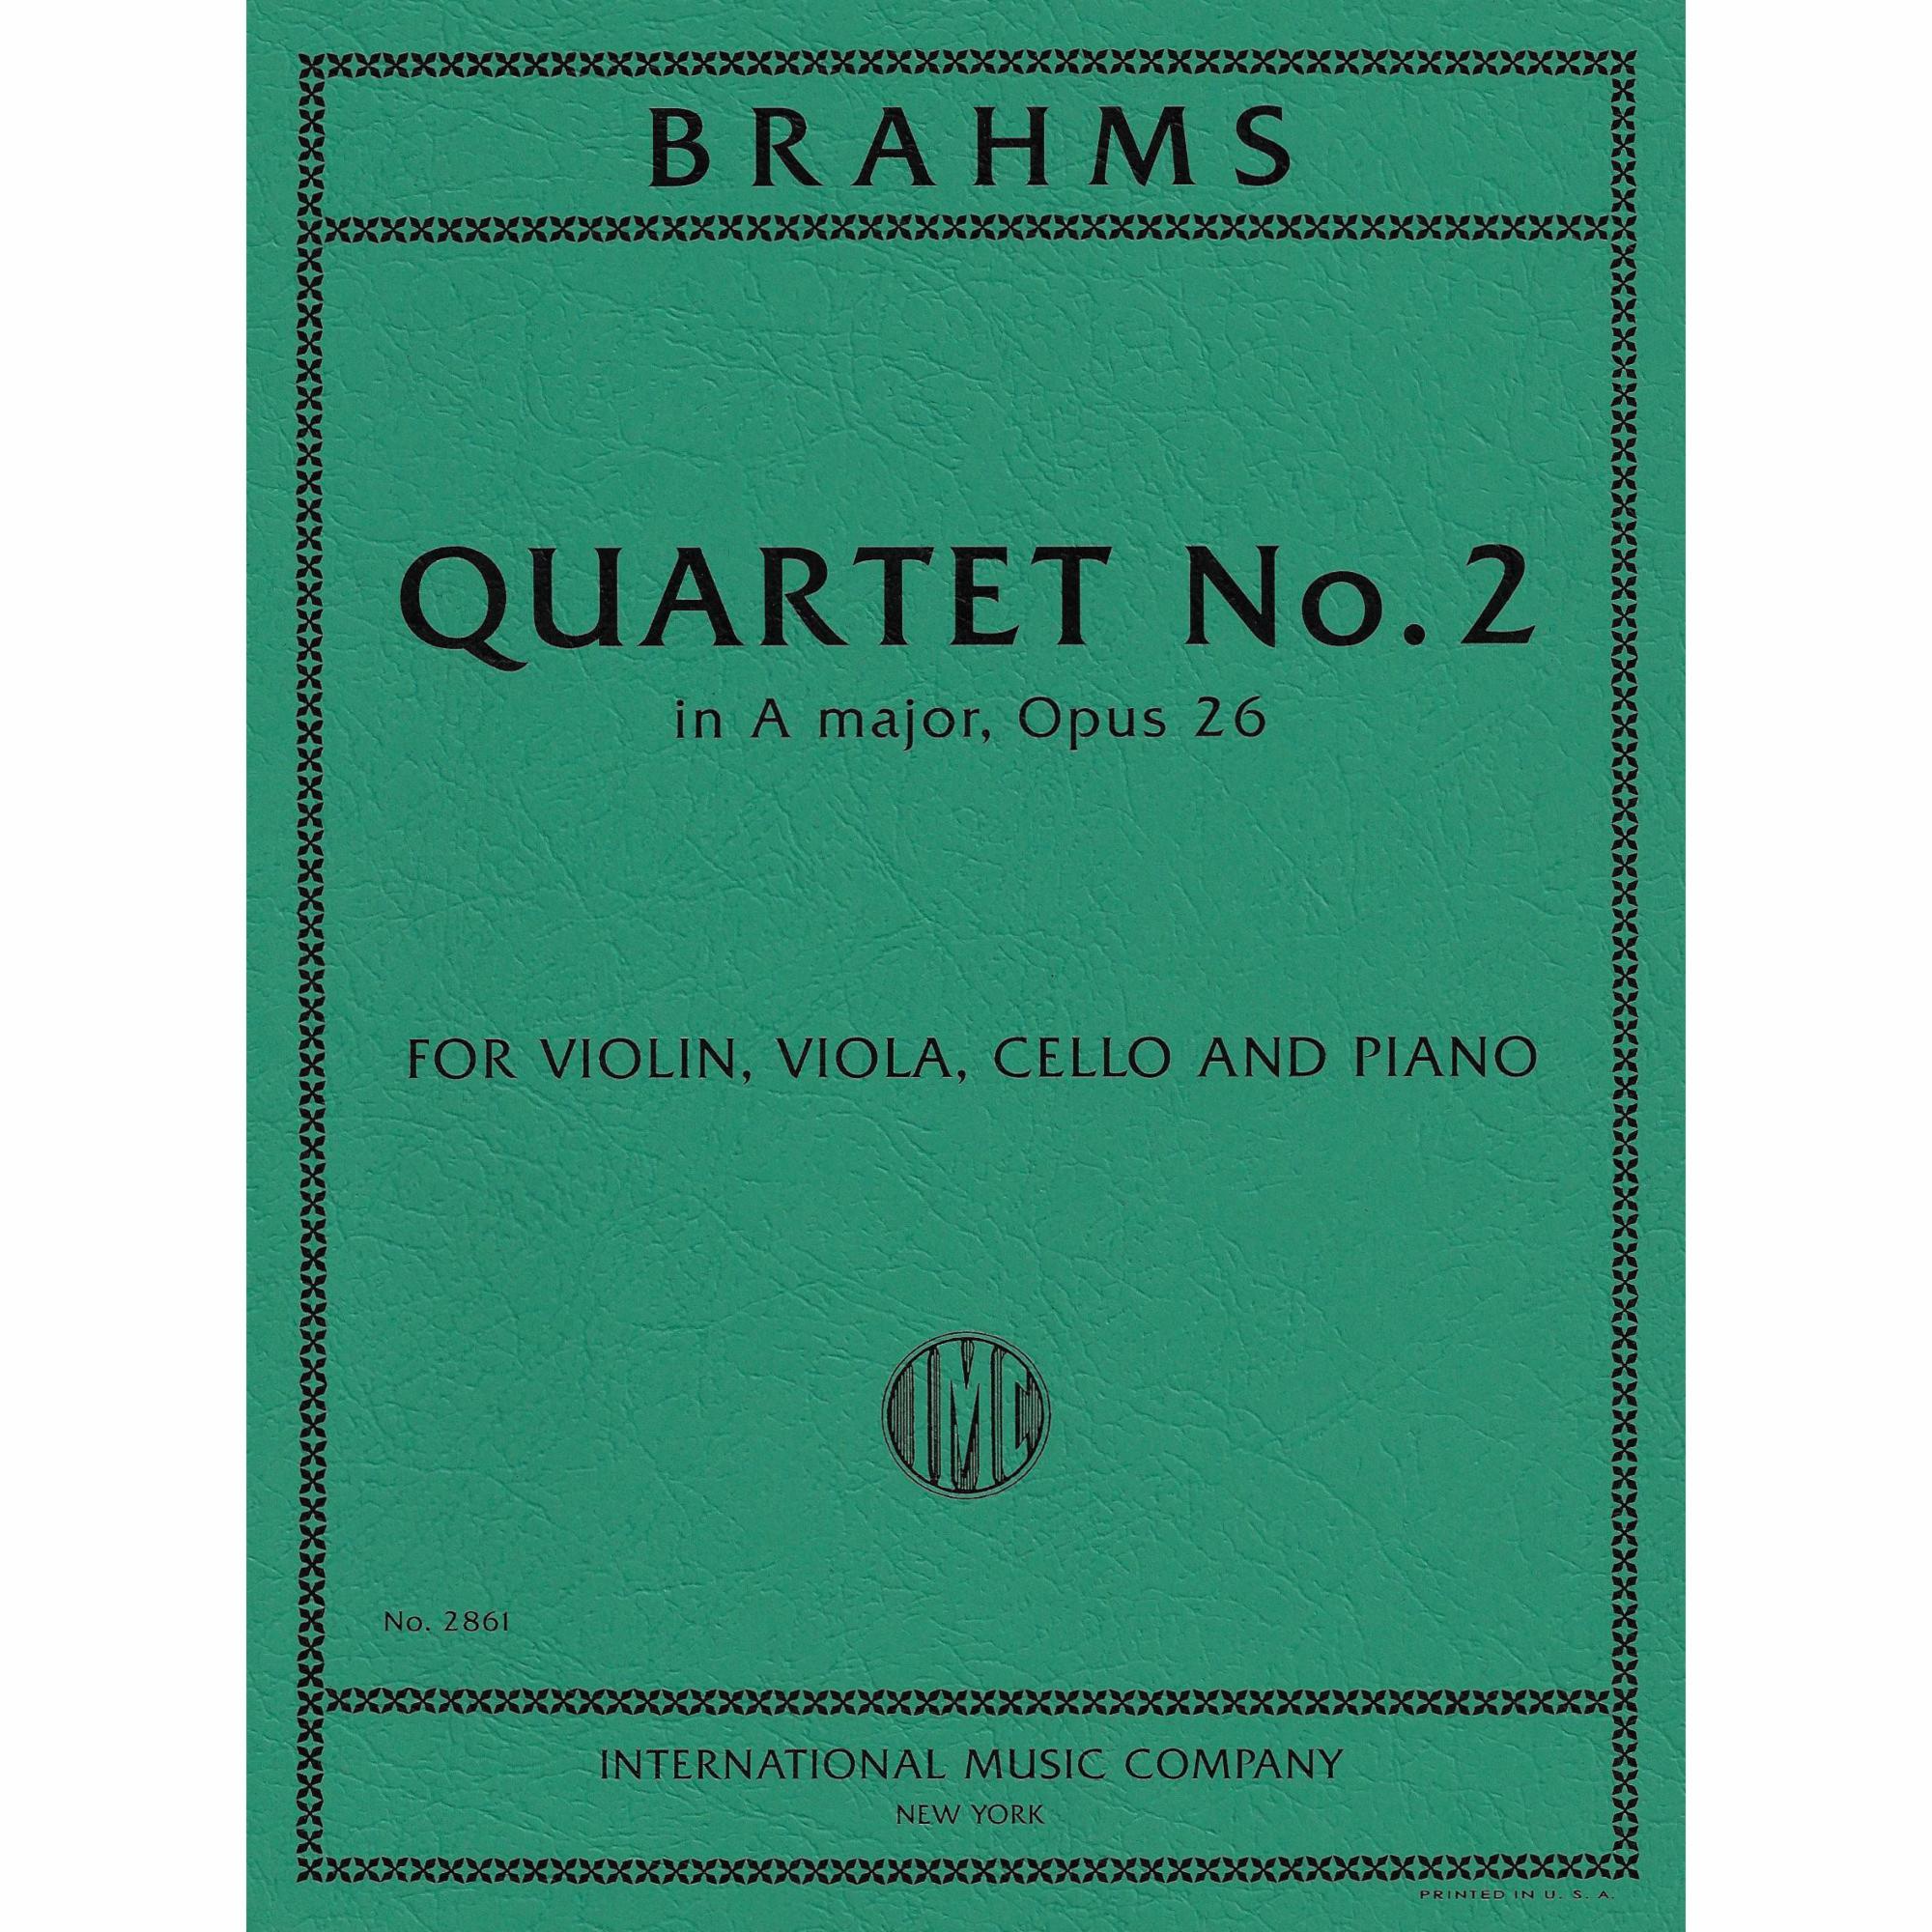 Brahms -- Piano Quartet No. 2 in A Major, Op. 26